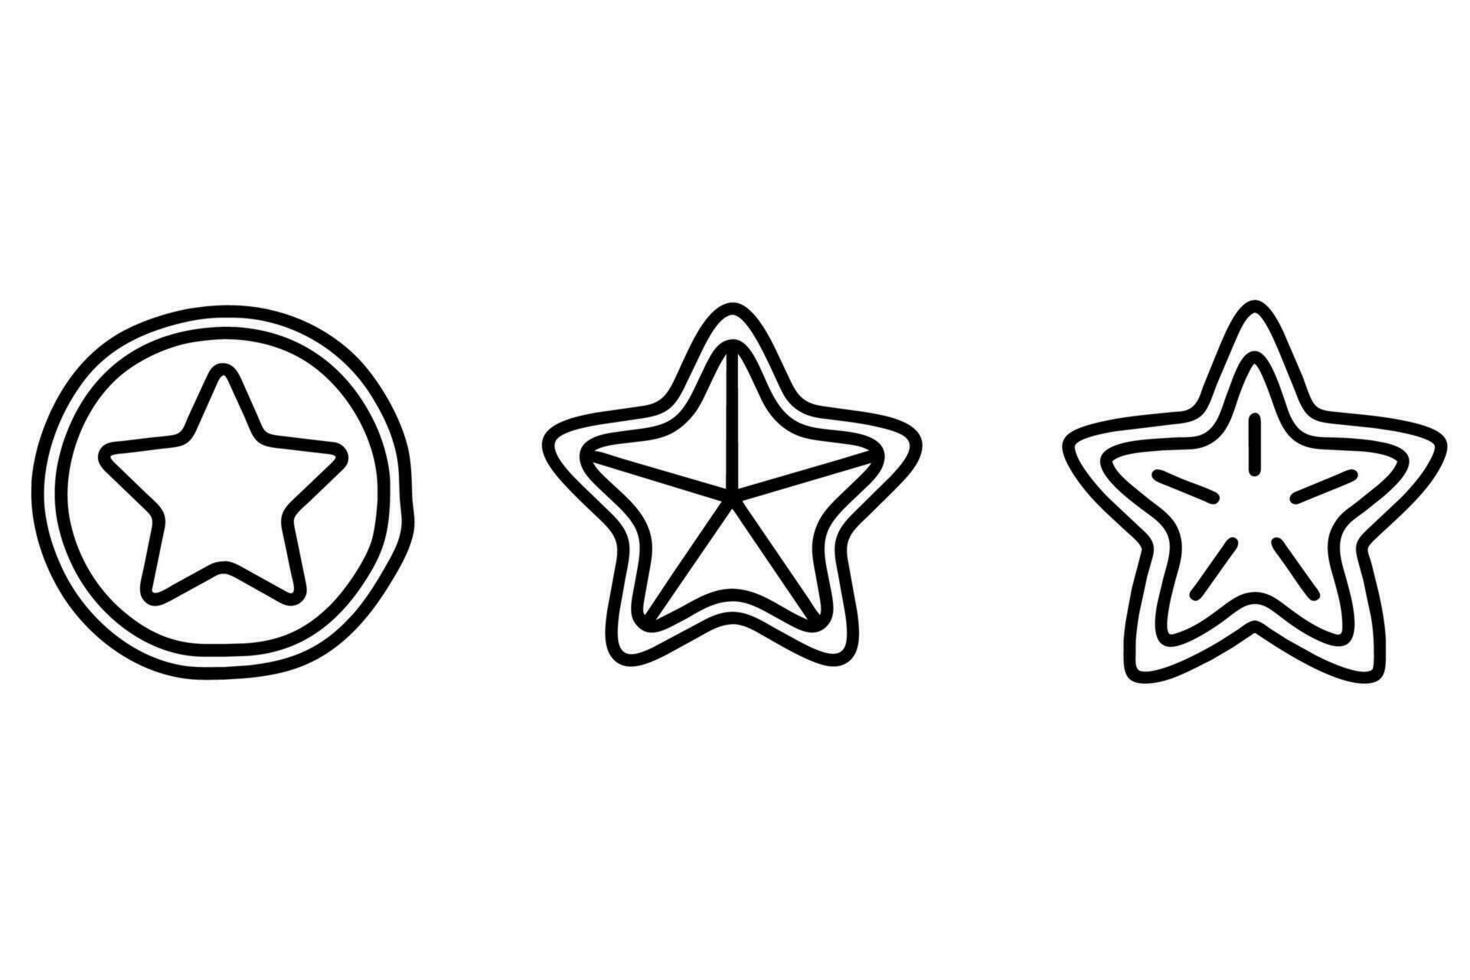 Star line art icon vector set.